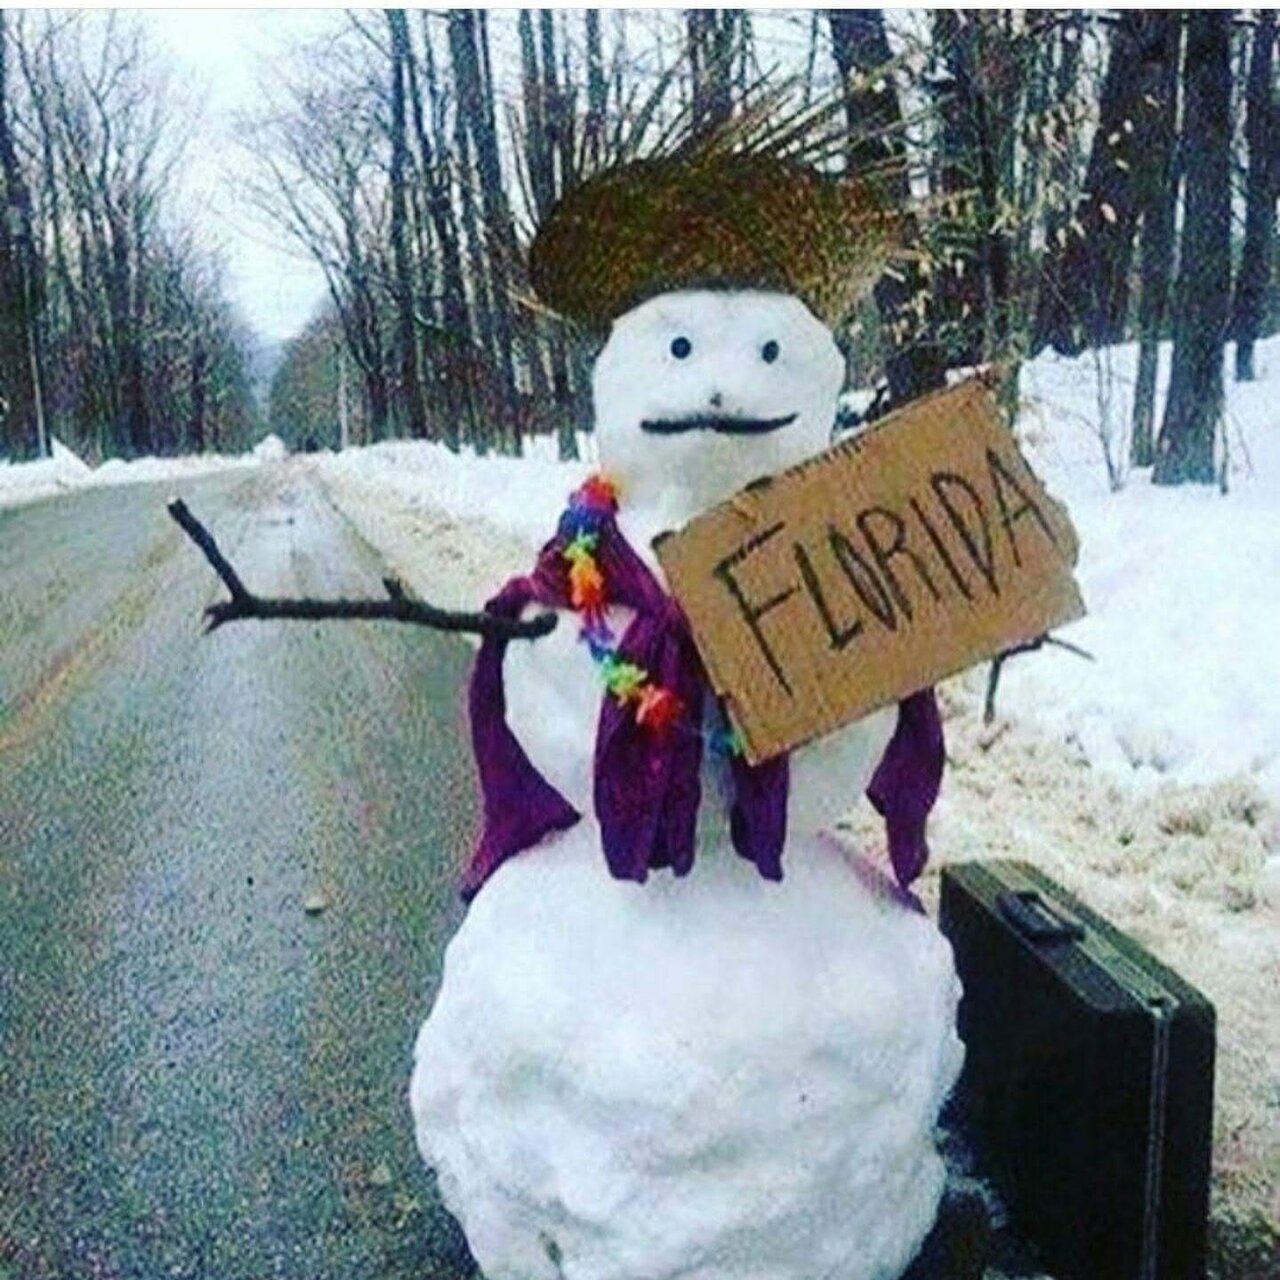 hitchhiking snowman.jpg